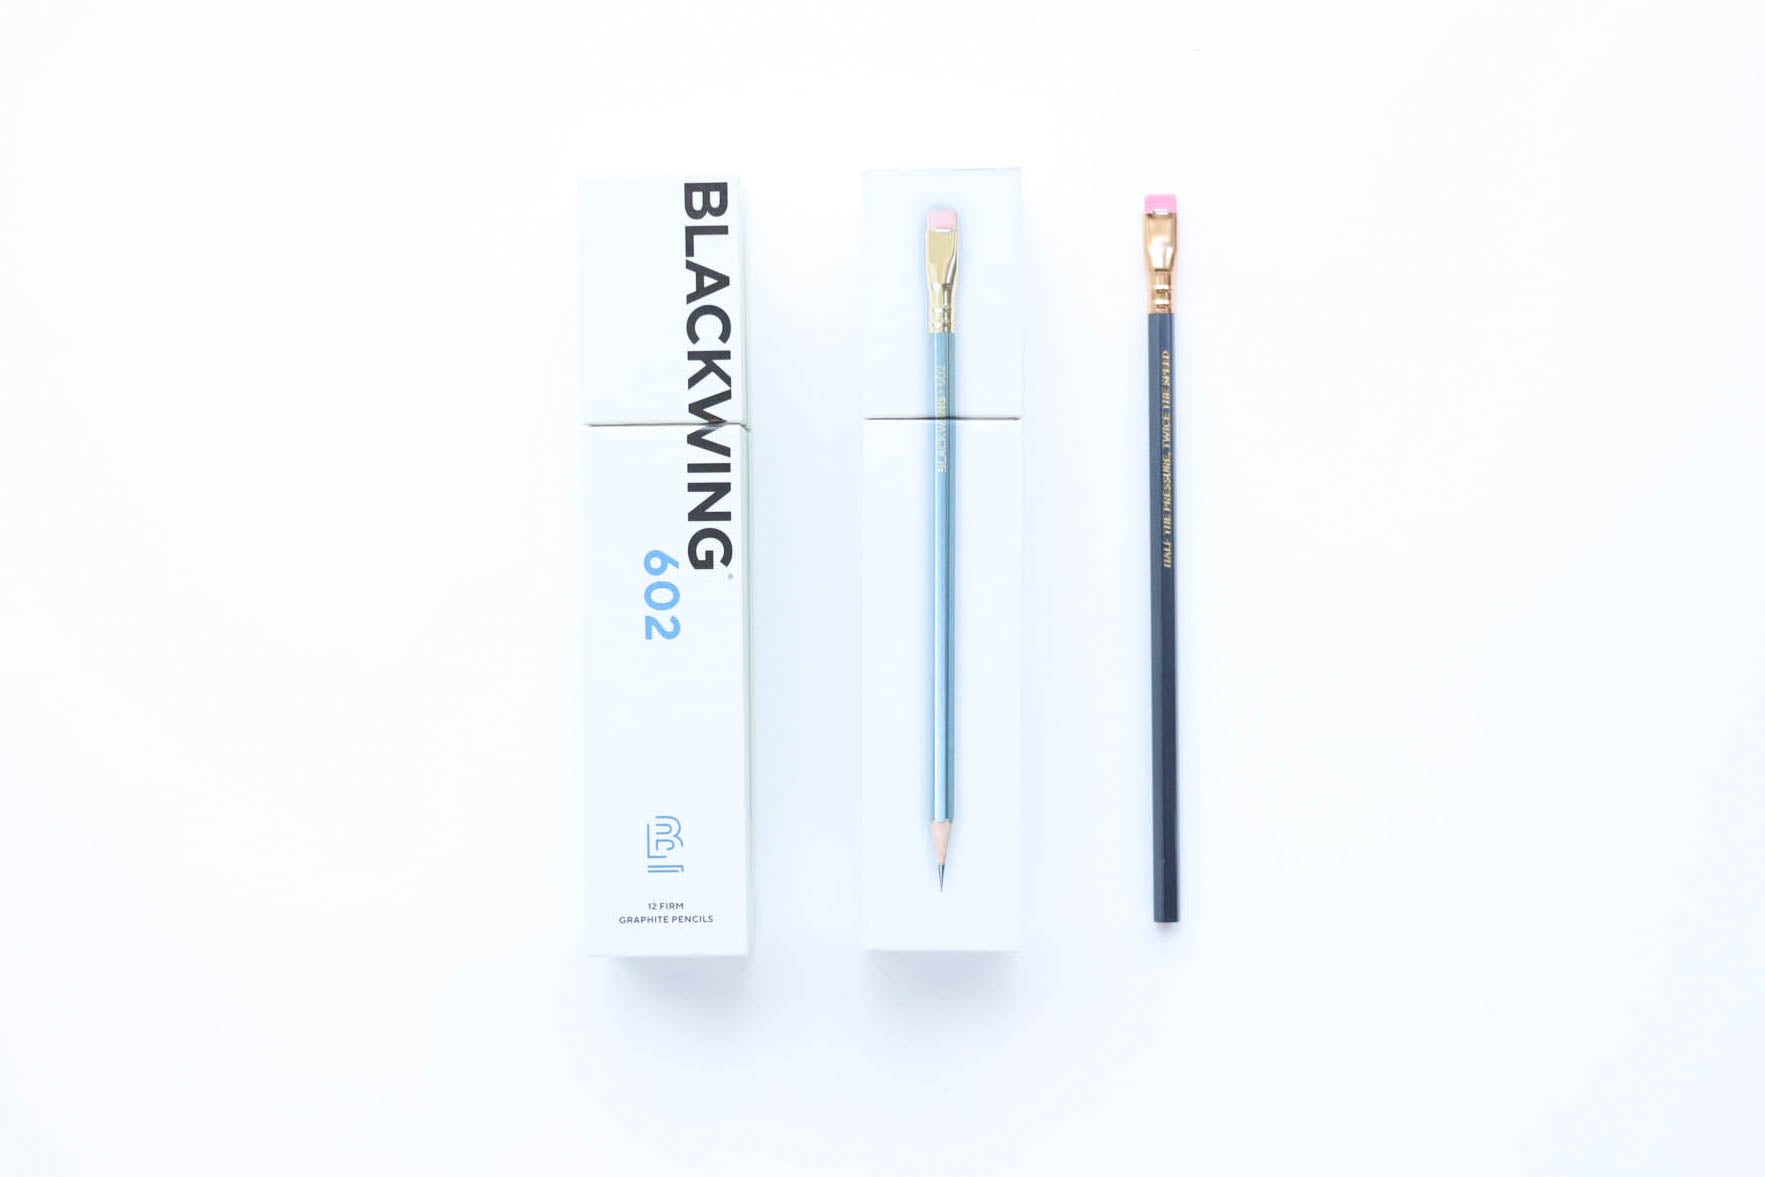 Blackwing Pencils Pack of 3 - Blackwing 602 + Blackwing Pearl + Blackwing  Black Matte Finish